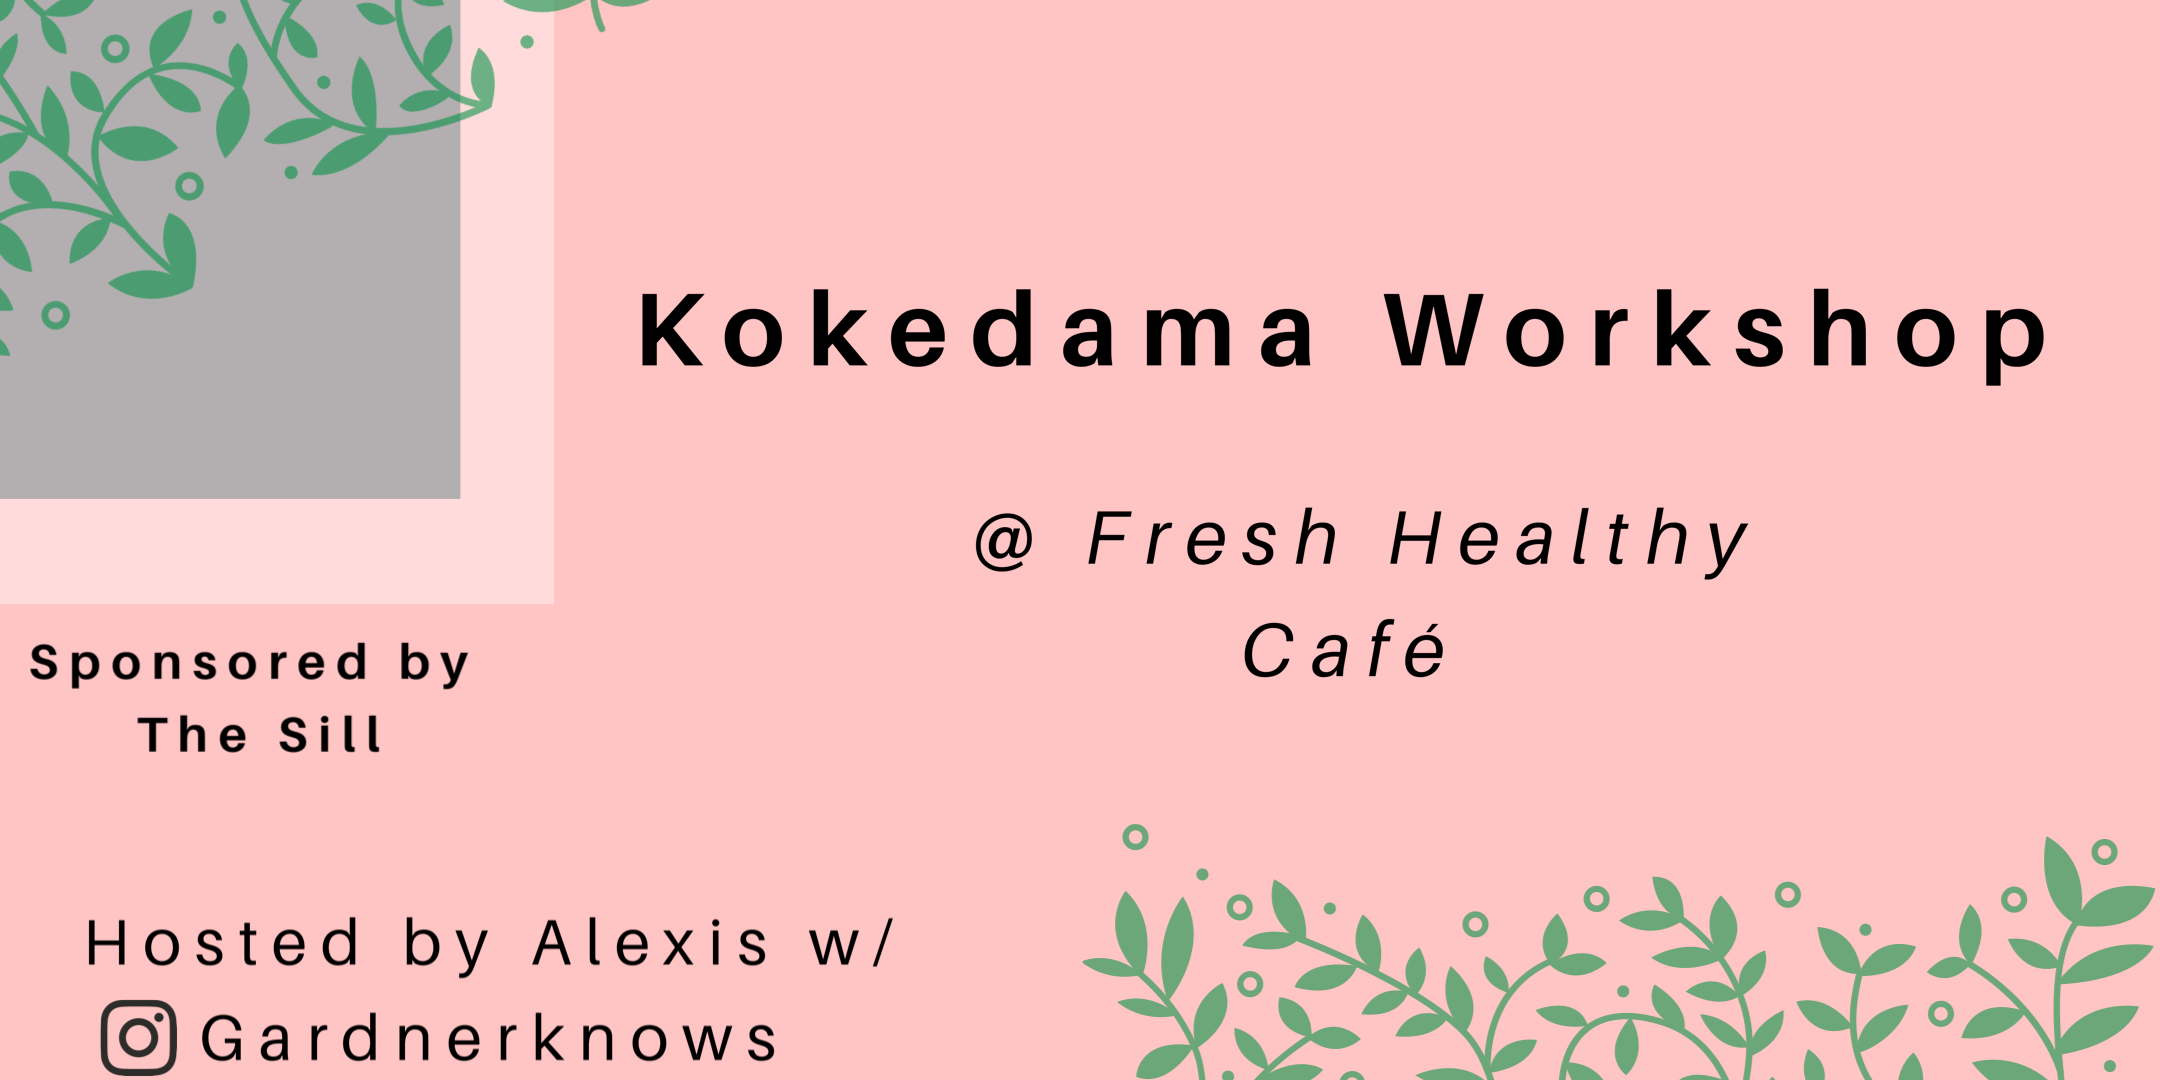 Kokedama Workshop 101